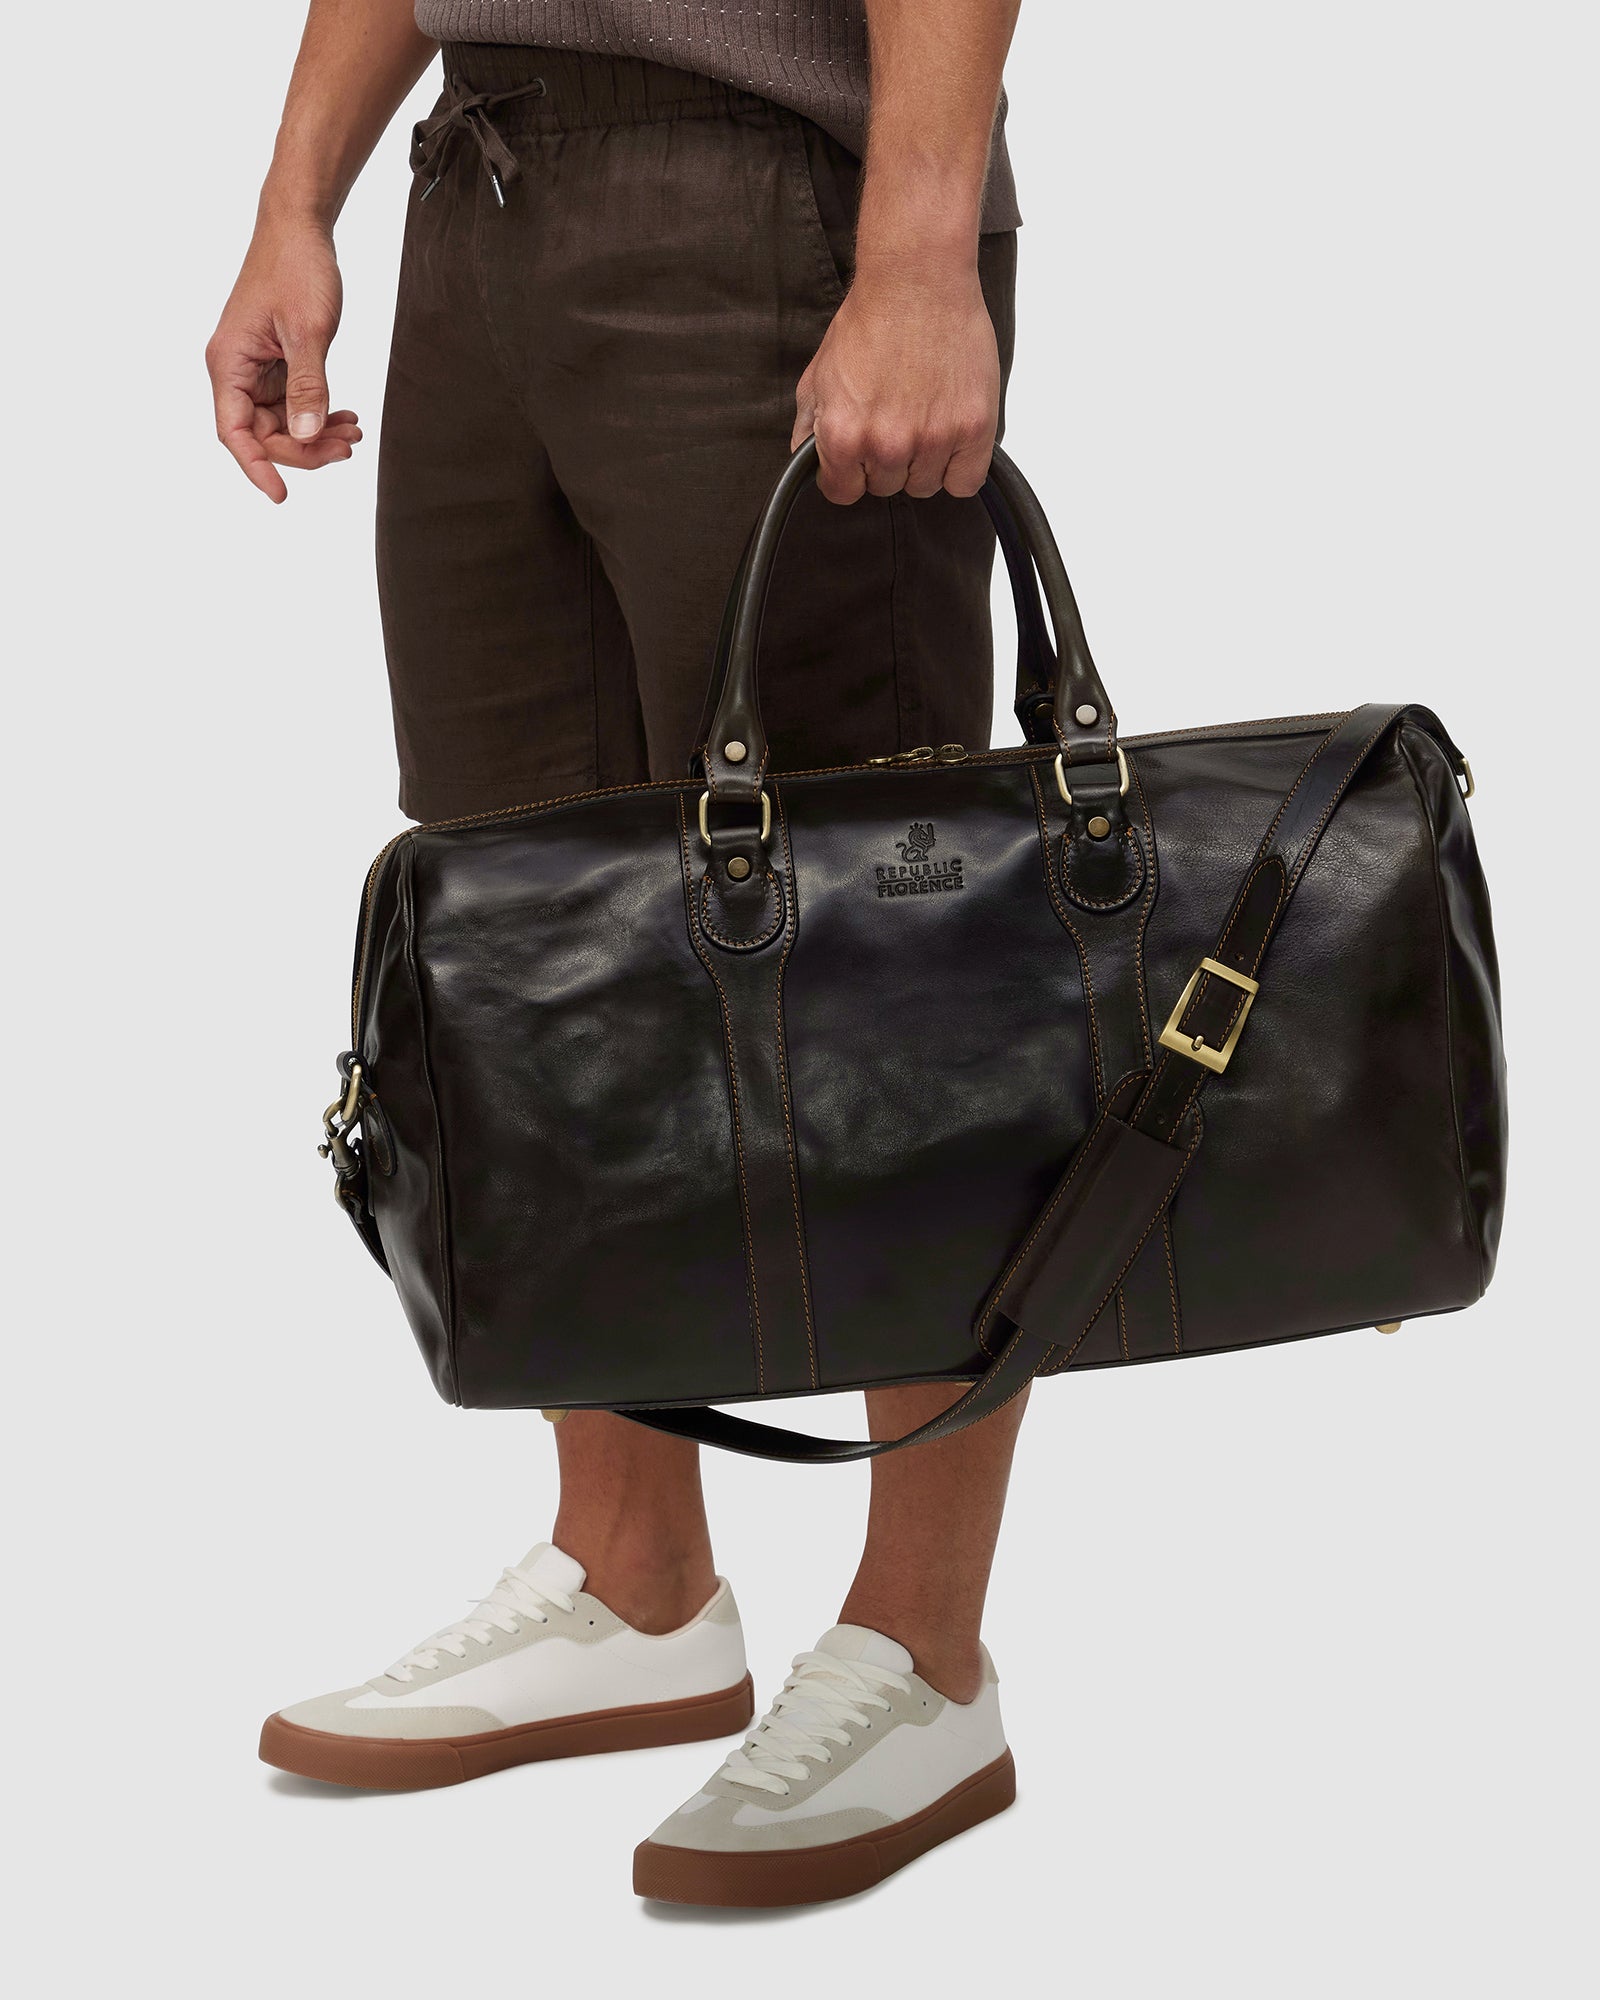 Amerigo Matt Black - Leather Duffle Bag - Republic of Florence